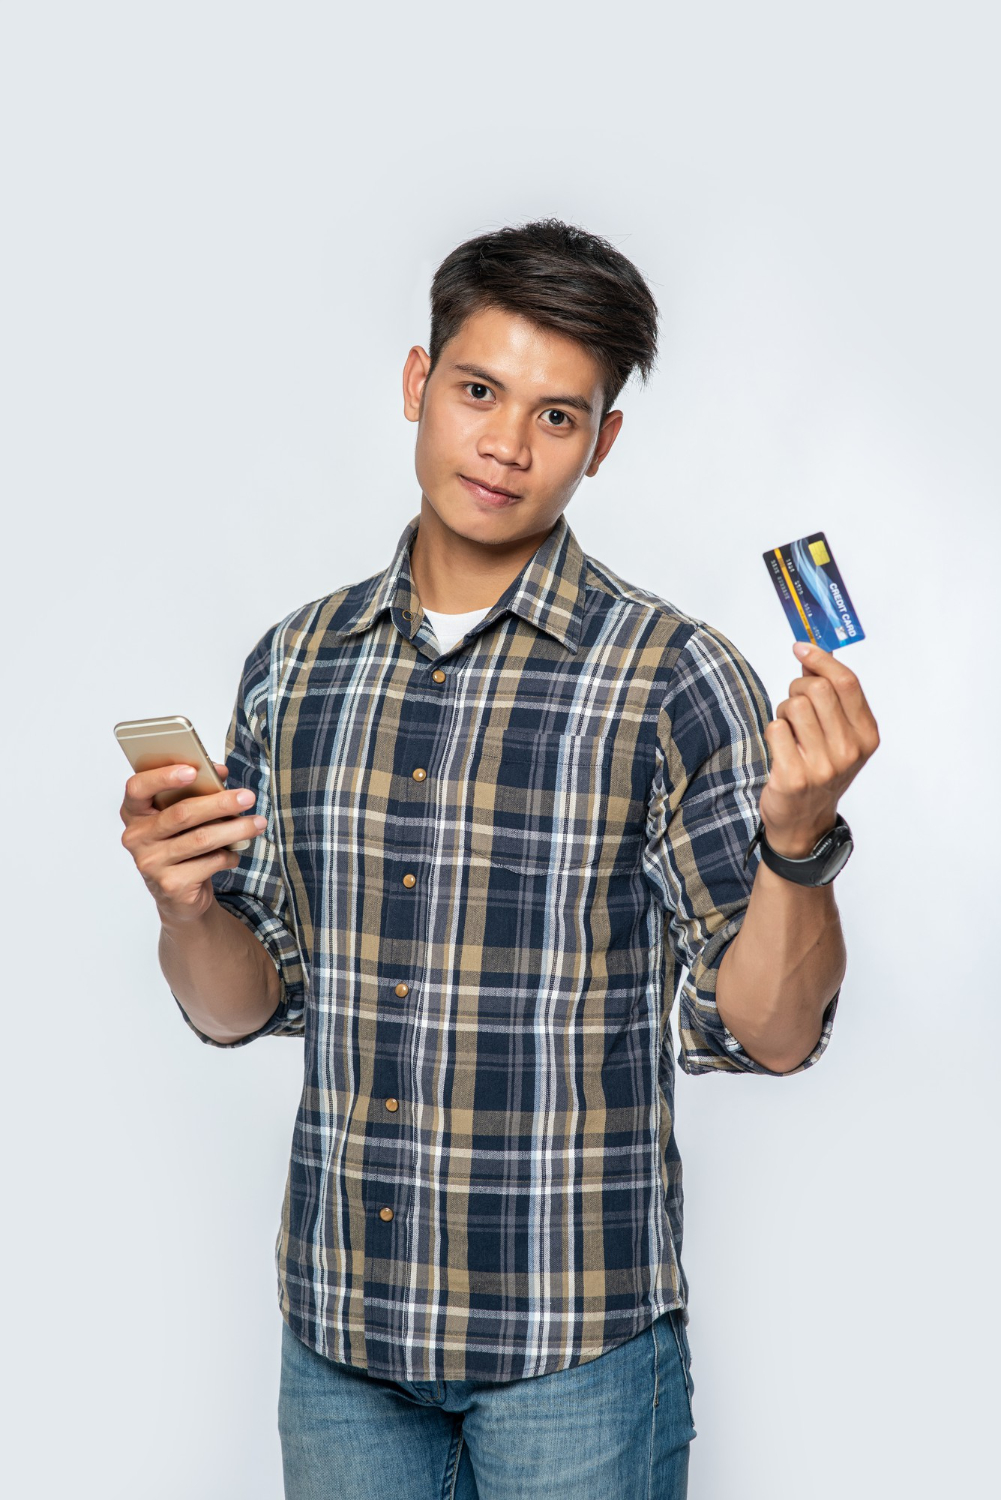 millennial renters- swipping card
